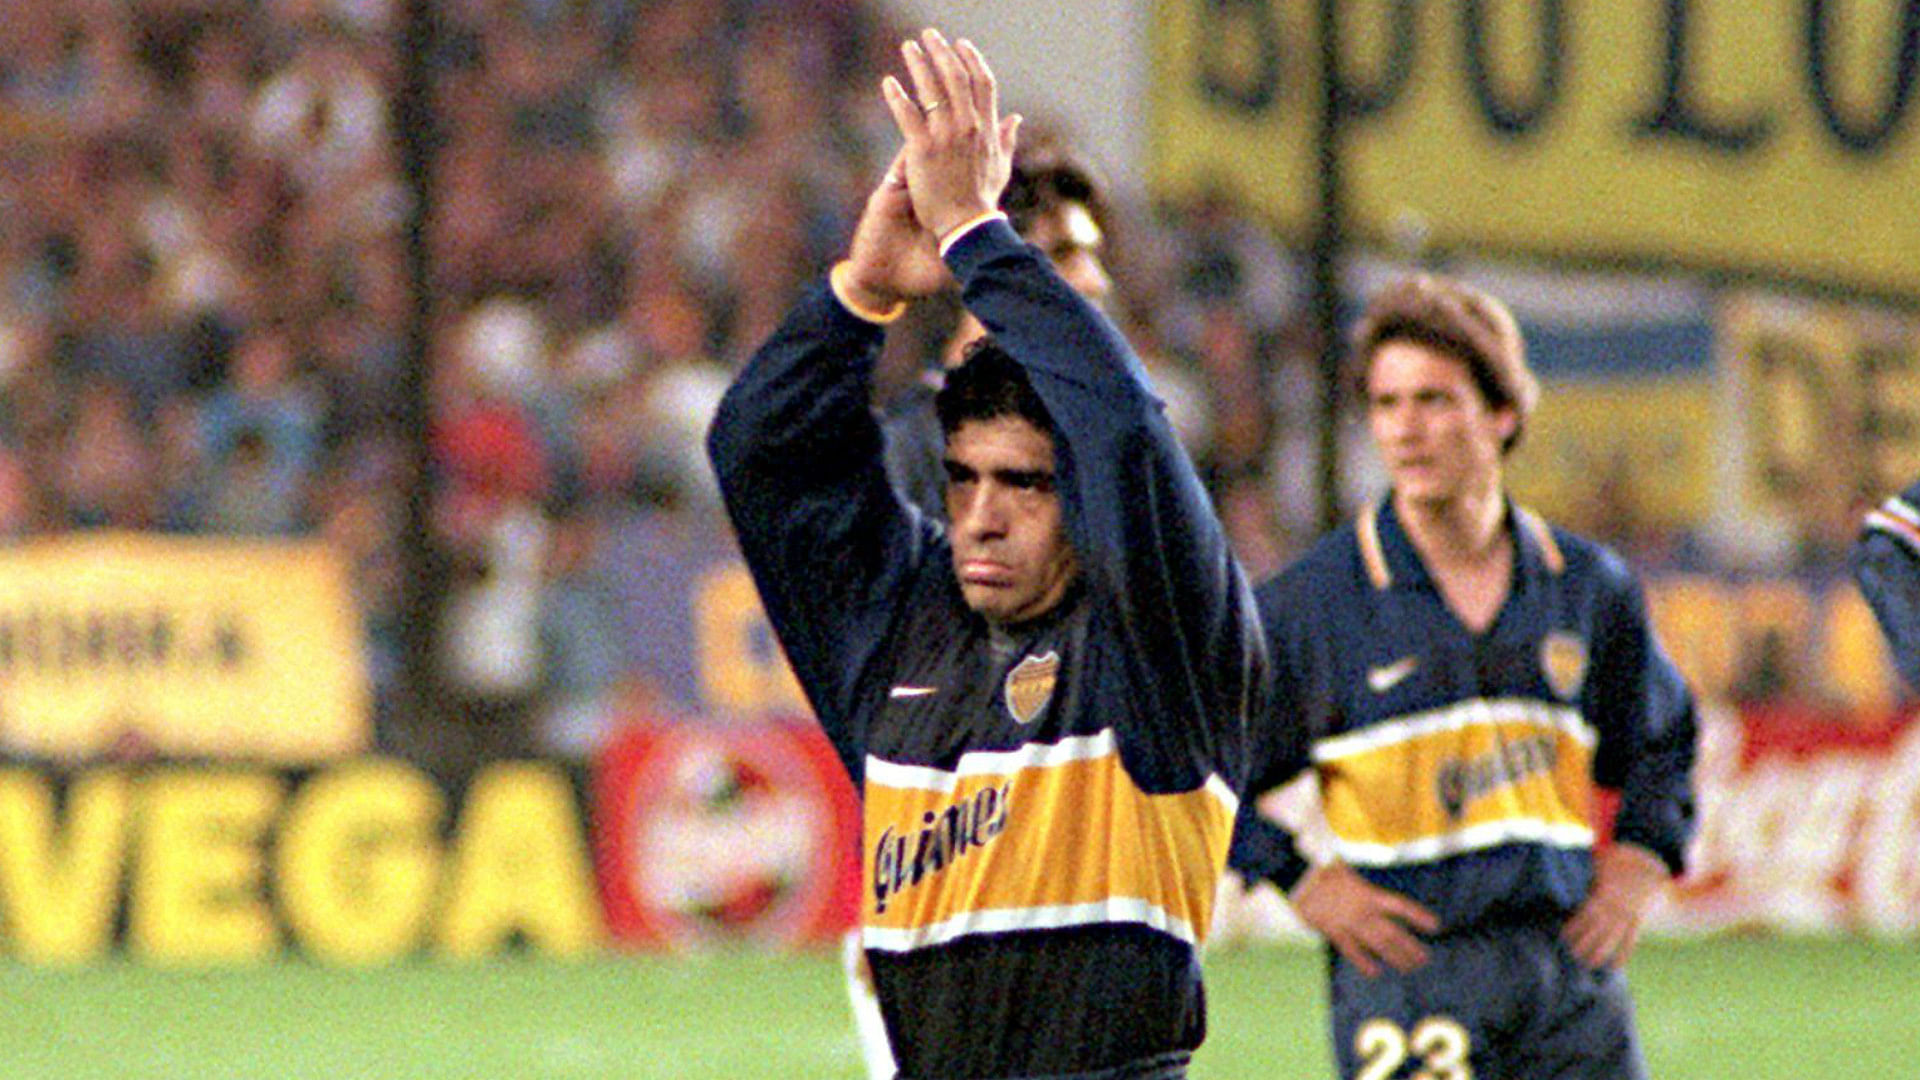 20201125_wb_maradona-16-1997-final_match.jpg